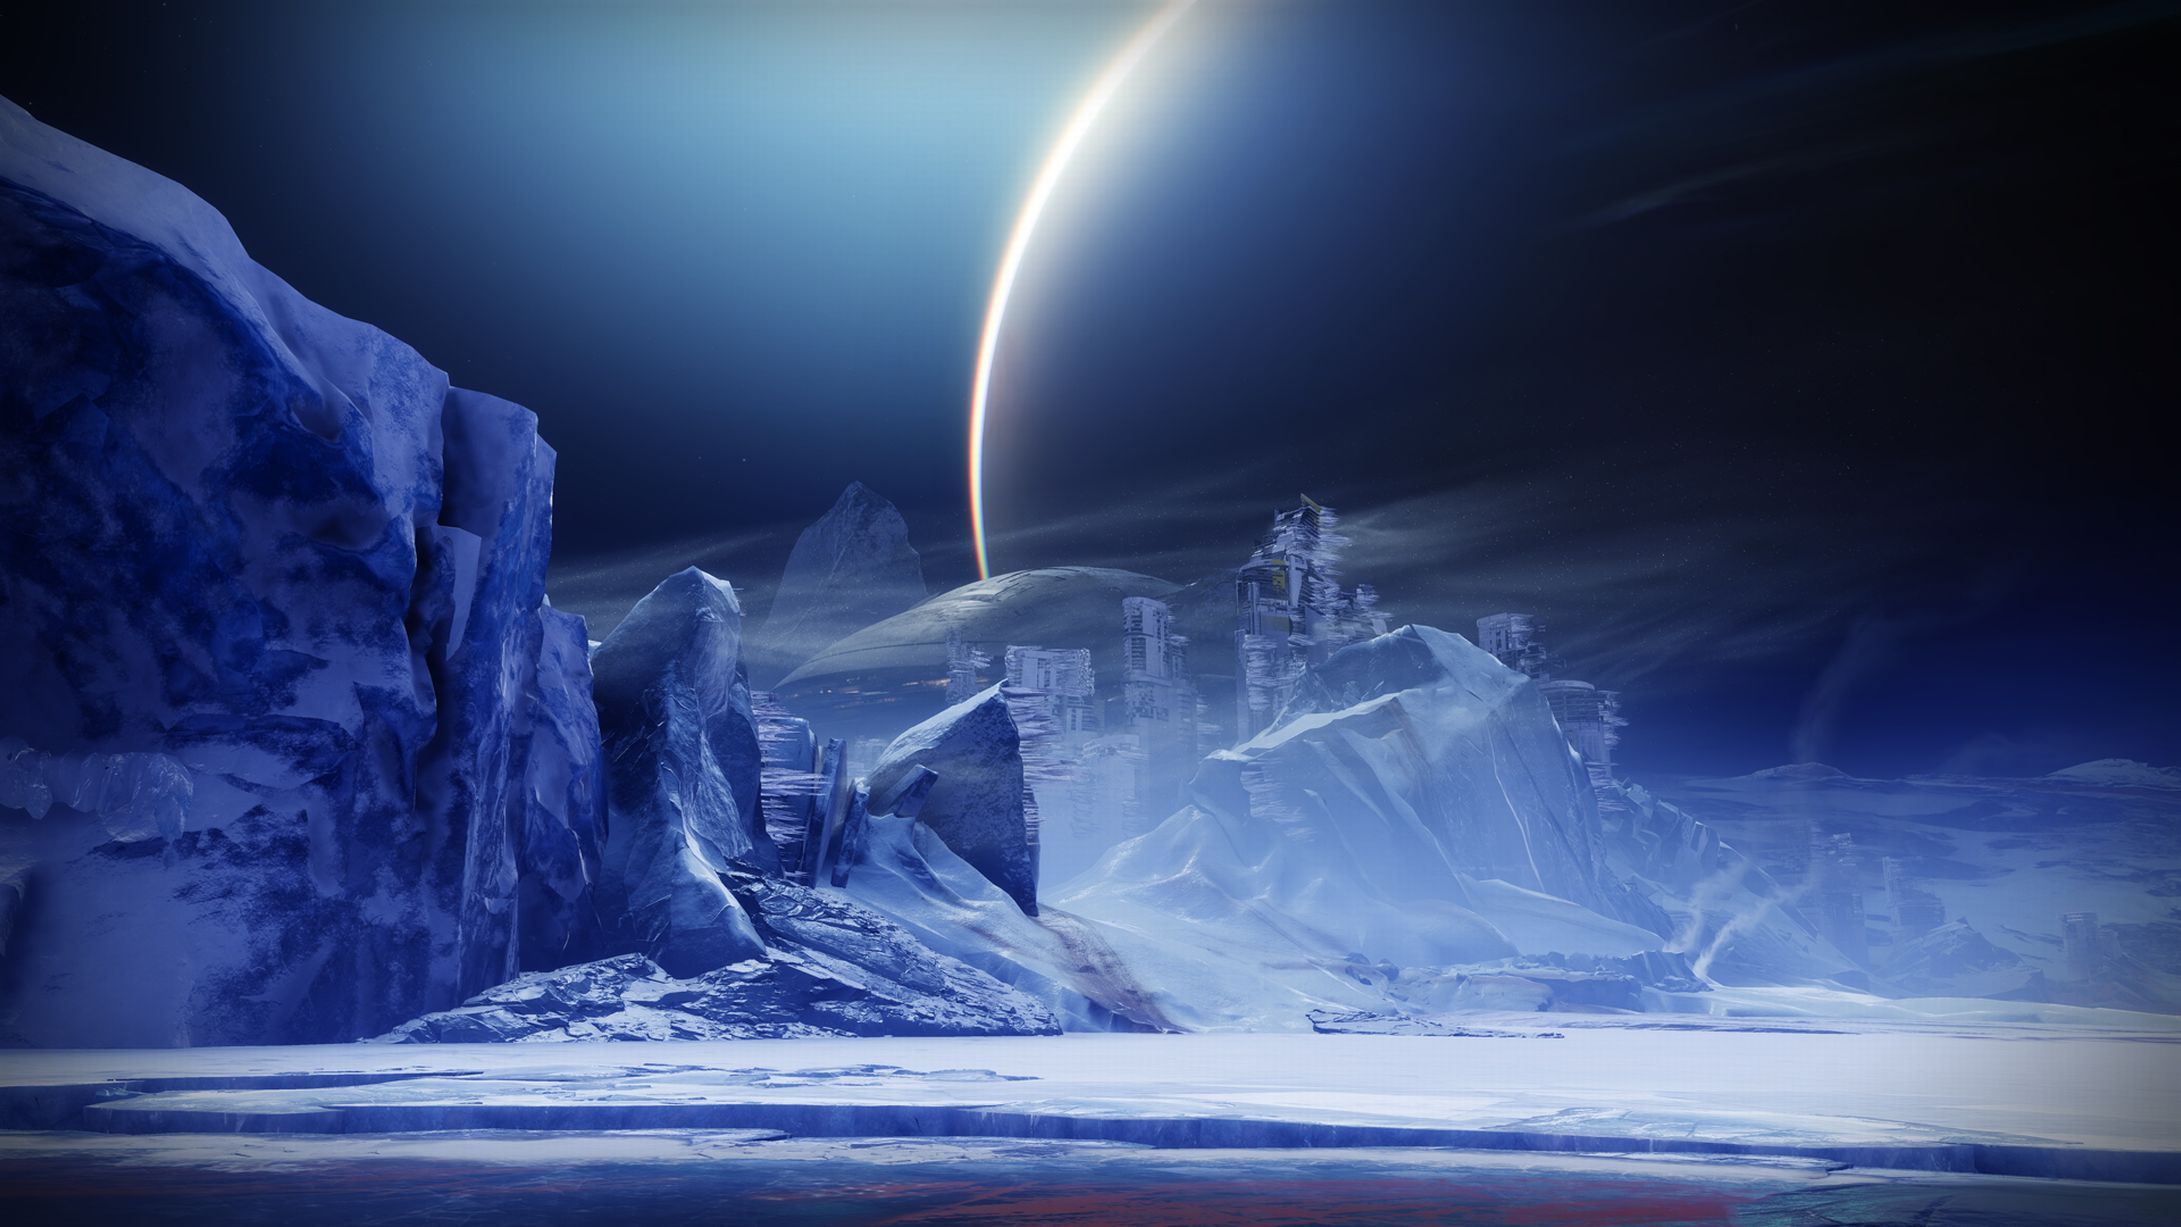 Destiny 2 Beyond Light Europa Image: First look screenshots of Bungie's new world